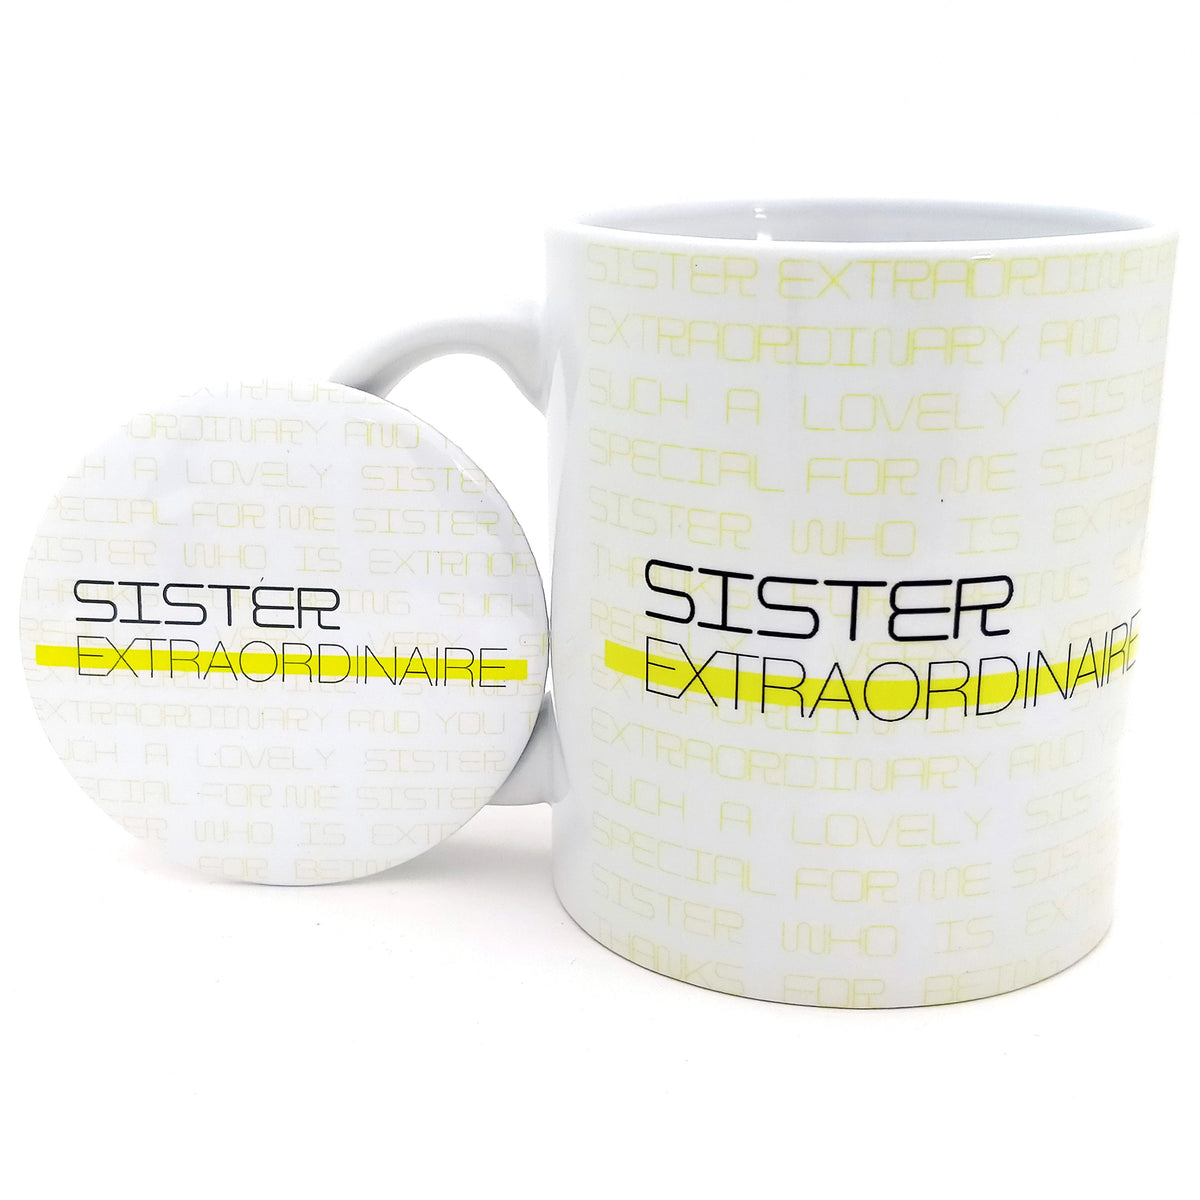 Sister Extraordinaire Mug & Badge